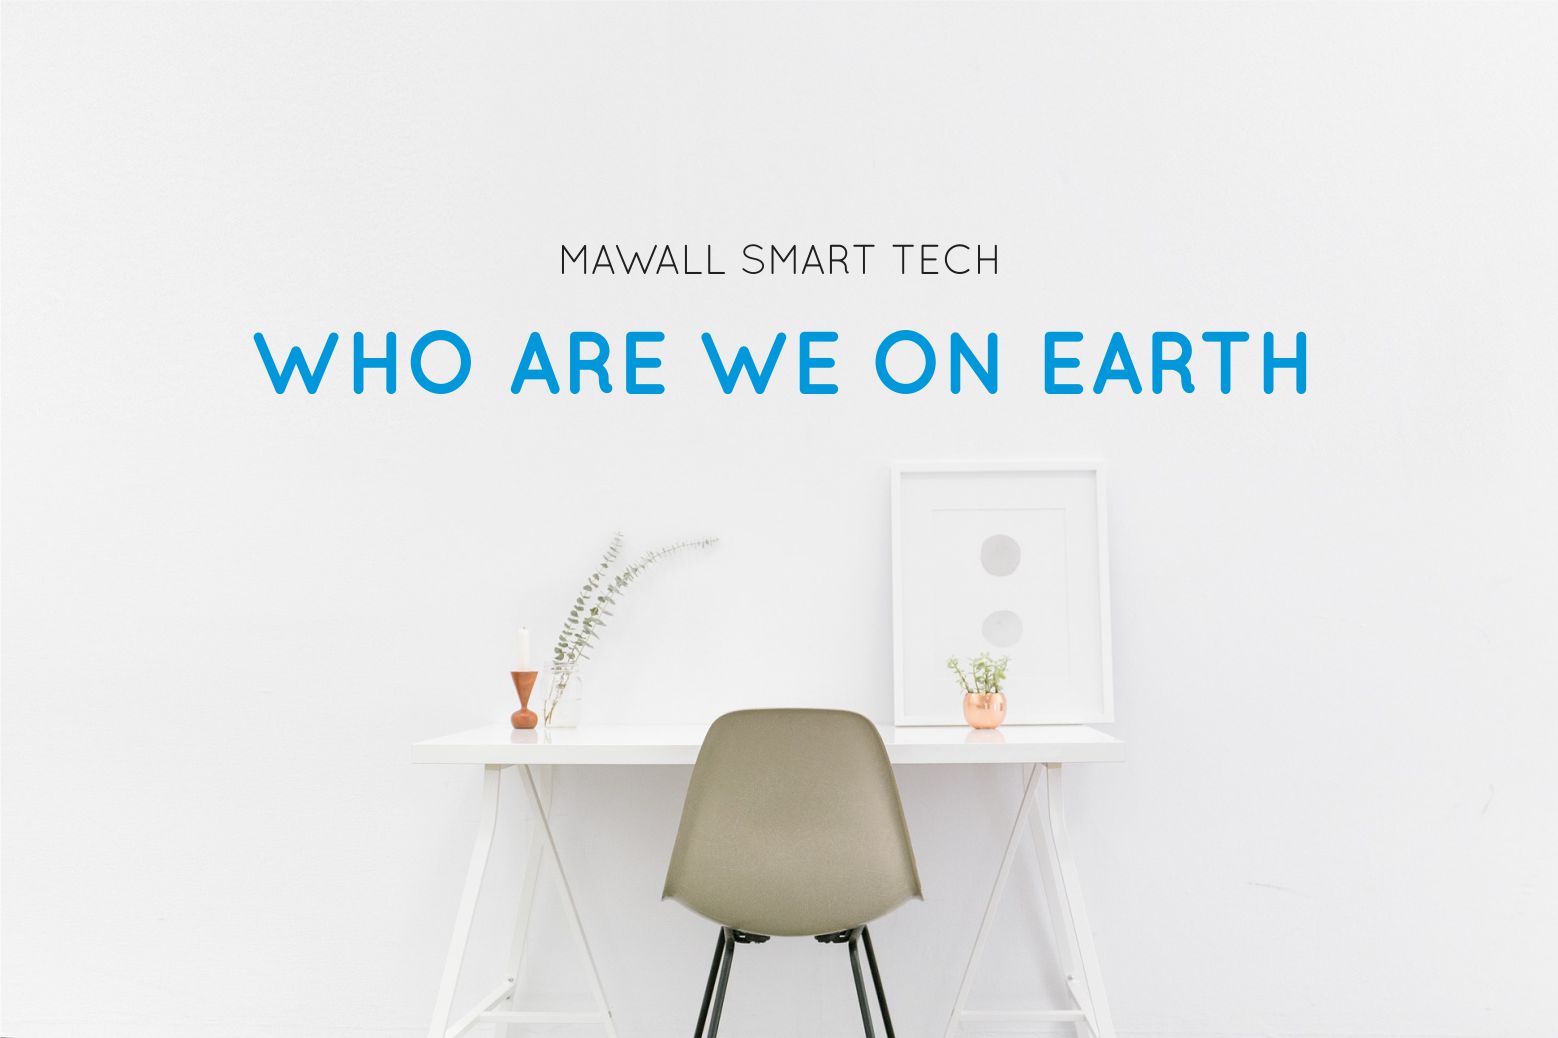 Mawall Smart Tech - About